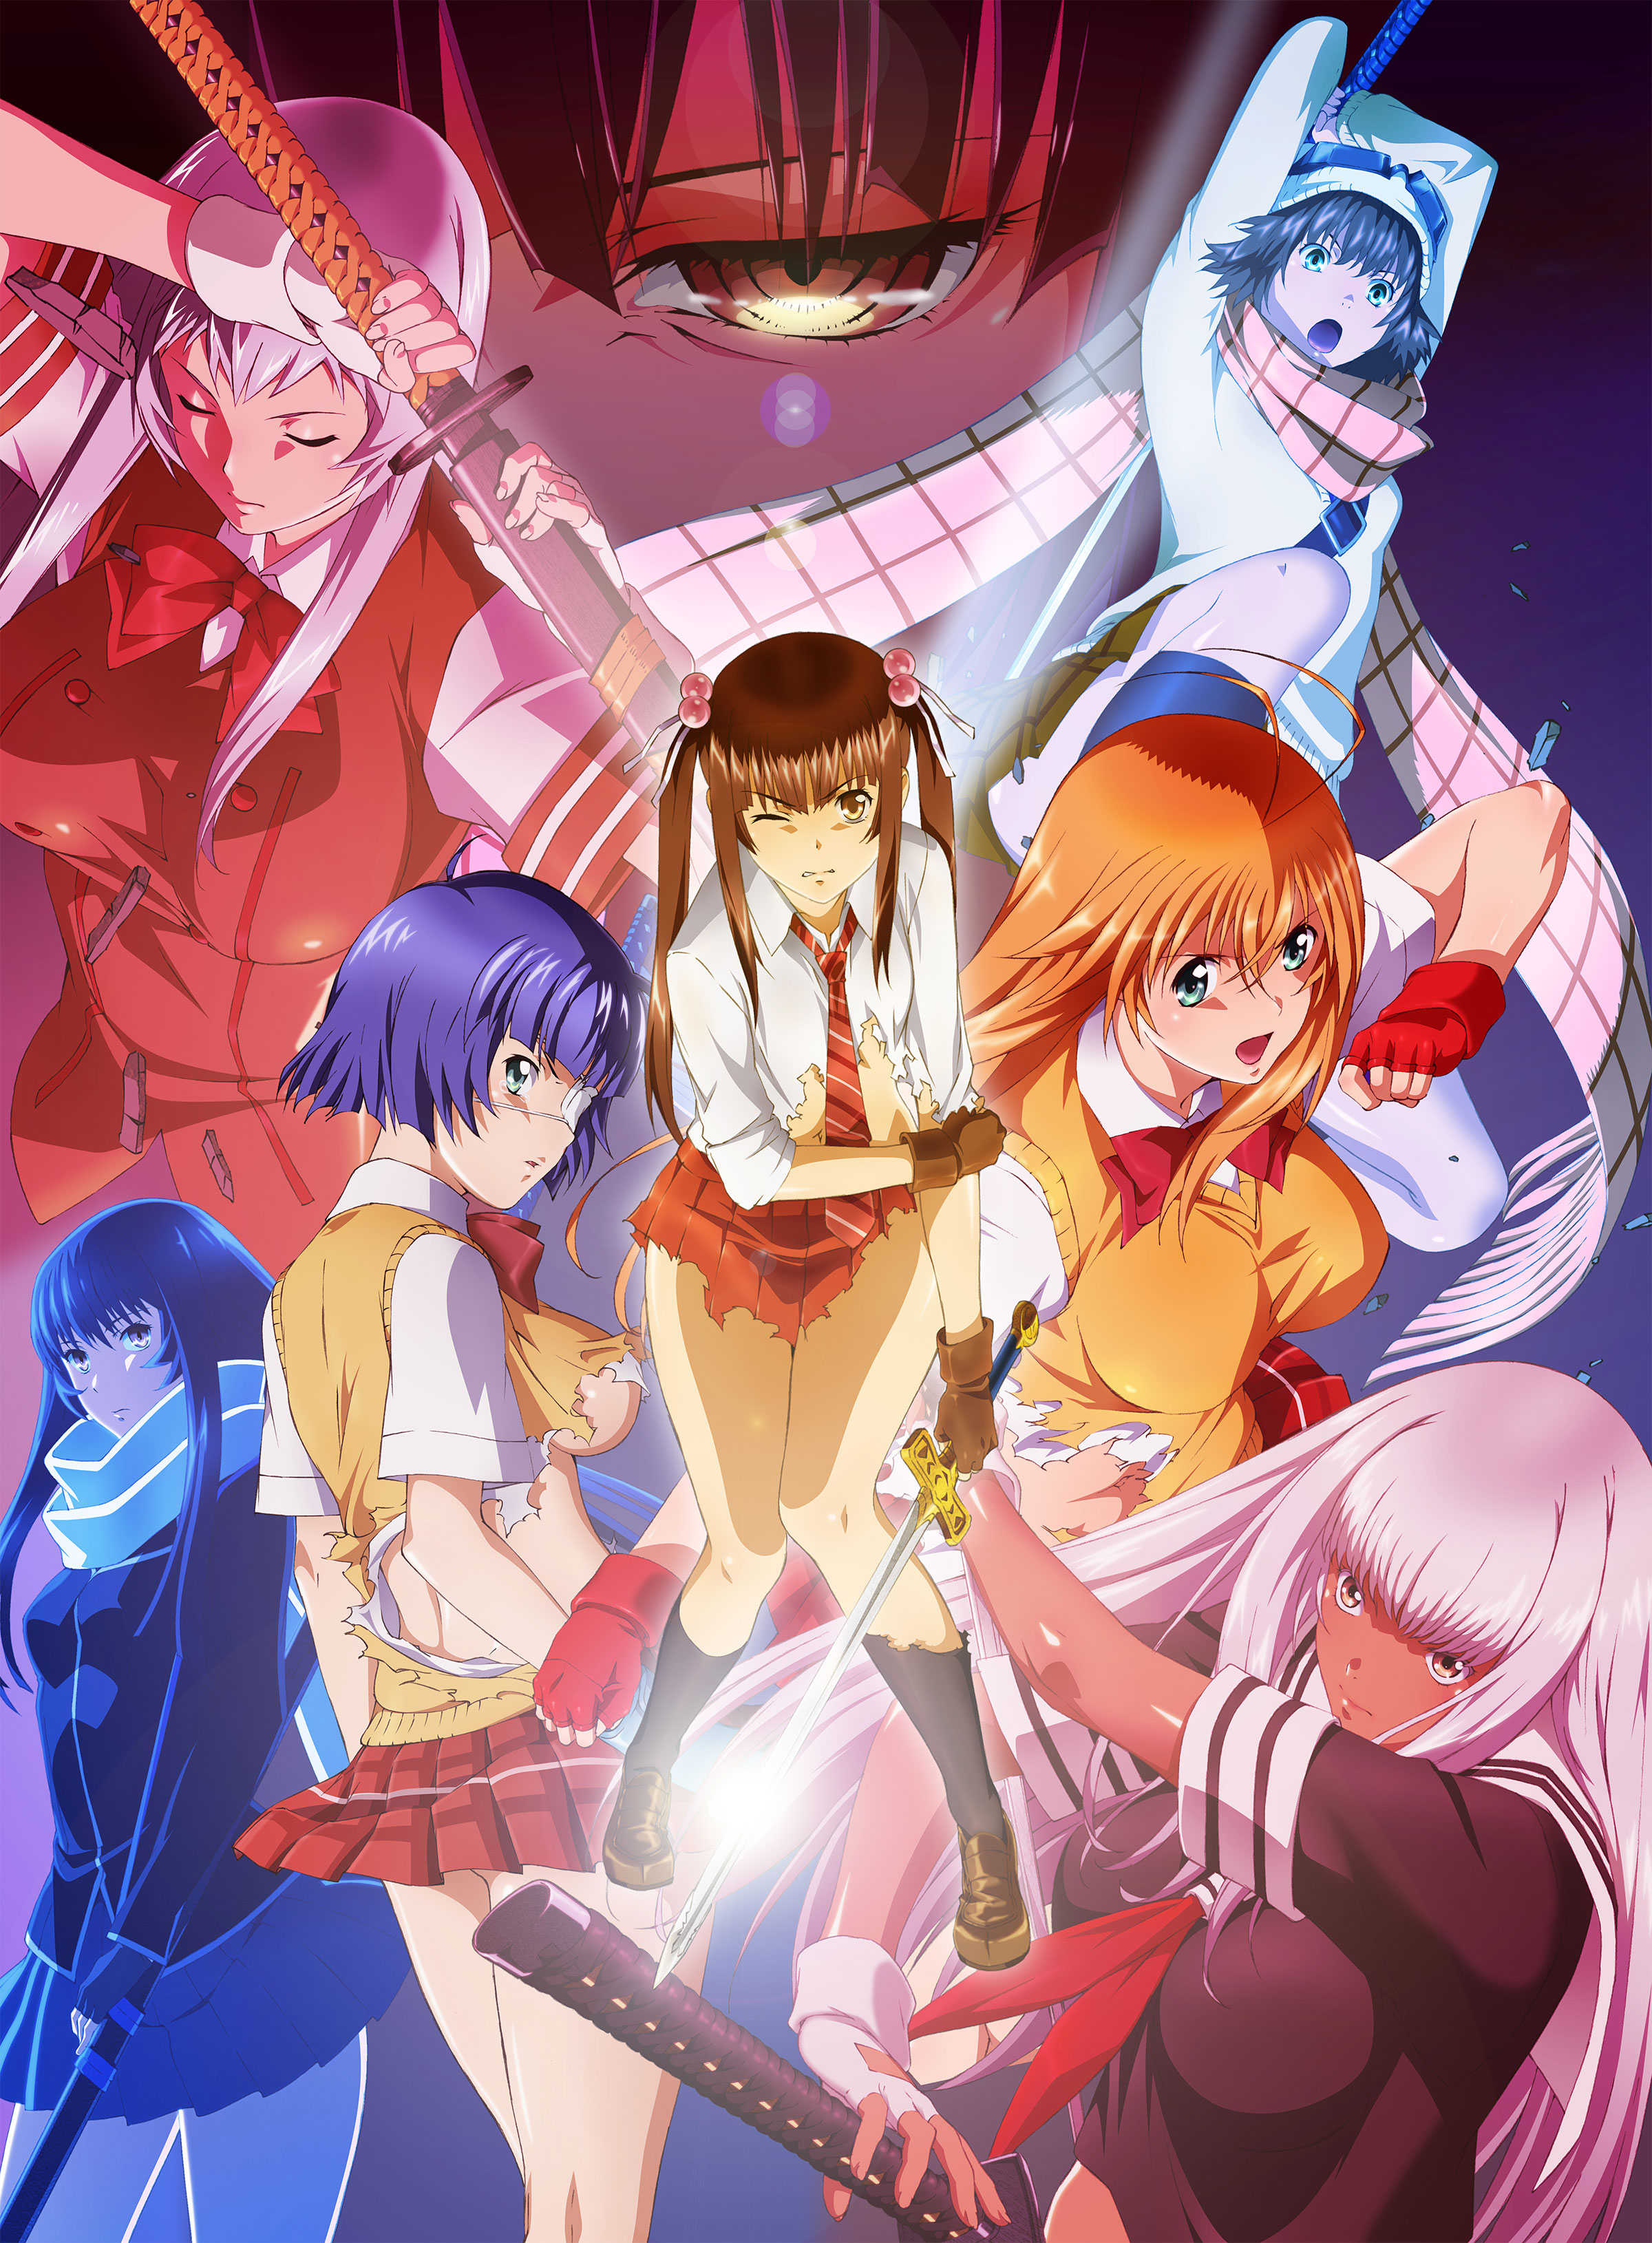 Shin Ikki Tousen Anime / Yamada Asaemon Poster for Sale by Ani-Games